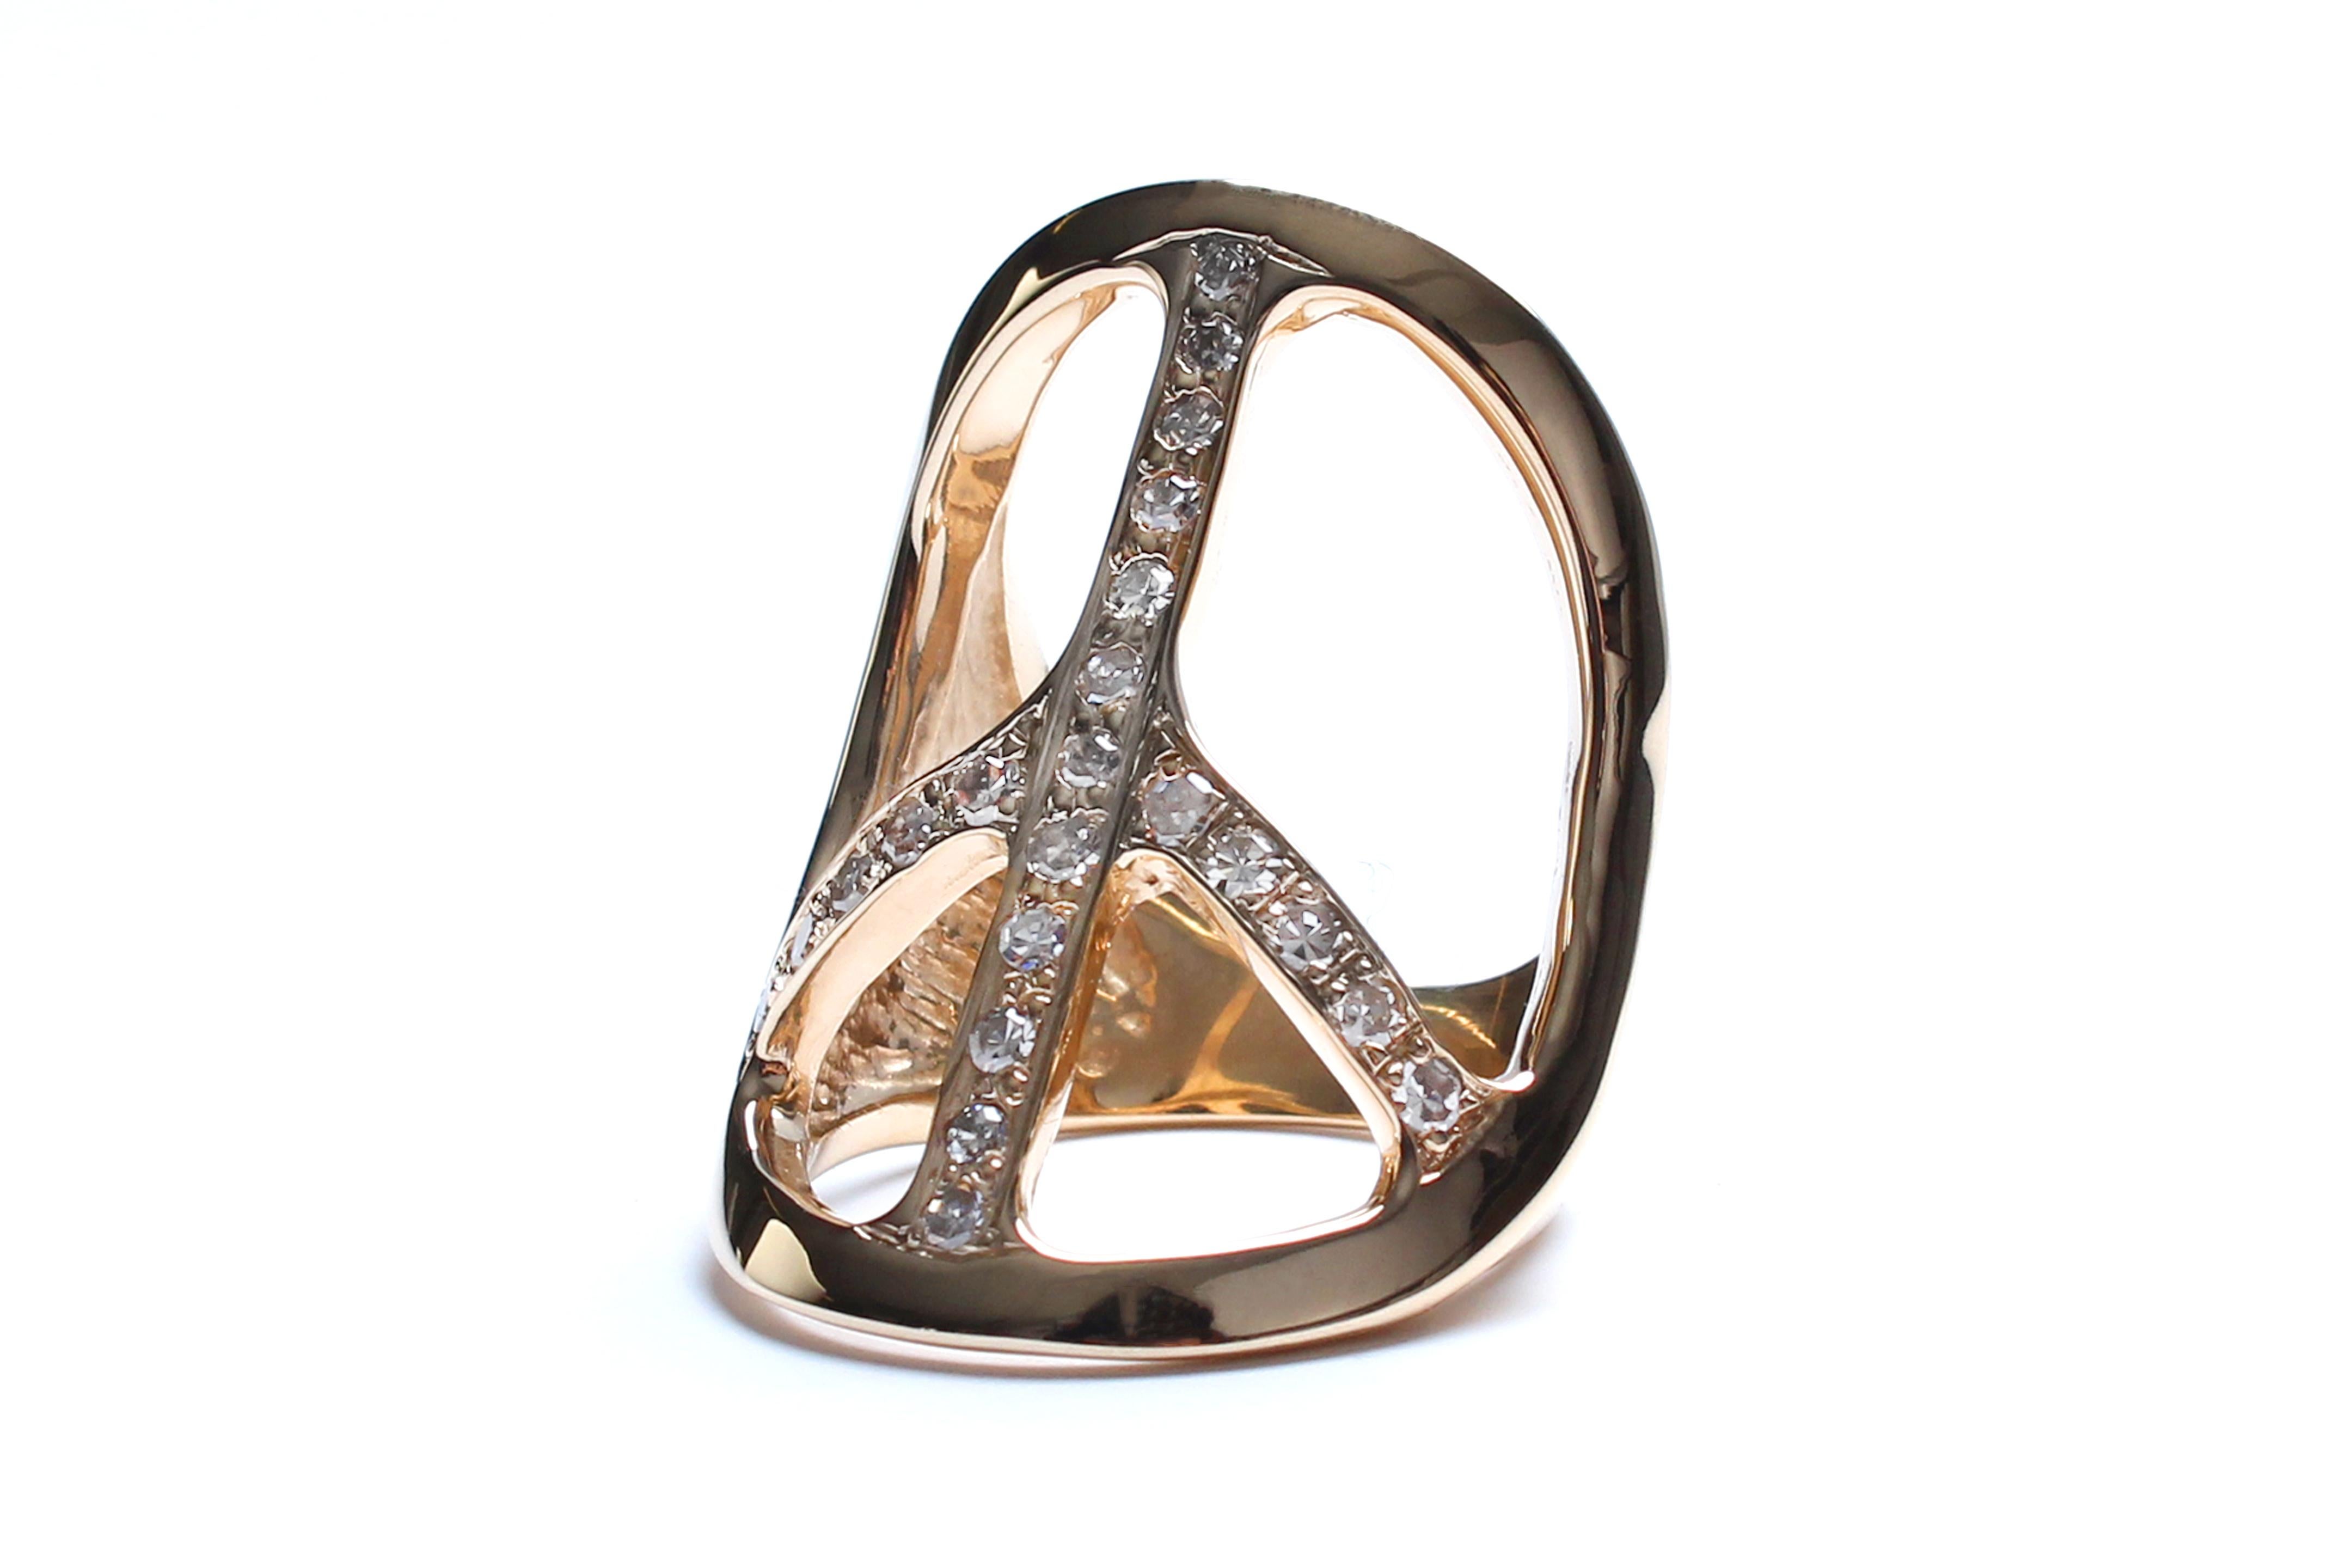 Clarissa Bronfman Signature Solid 14 Karat Gold Diamond Peace Ring For Sale 1